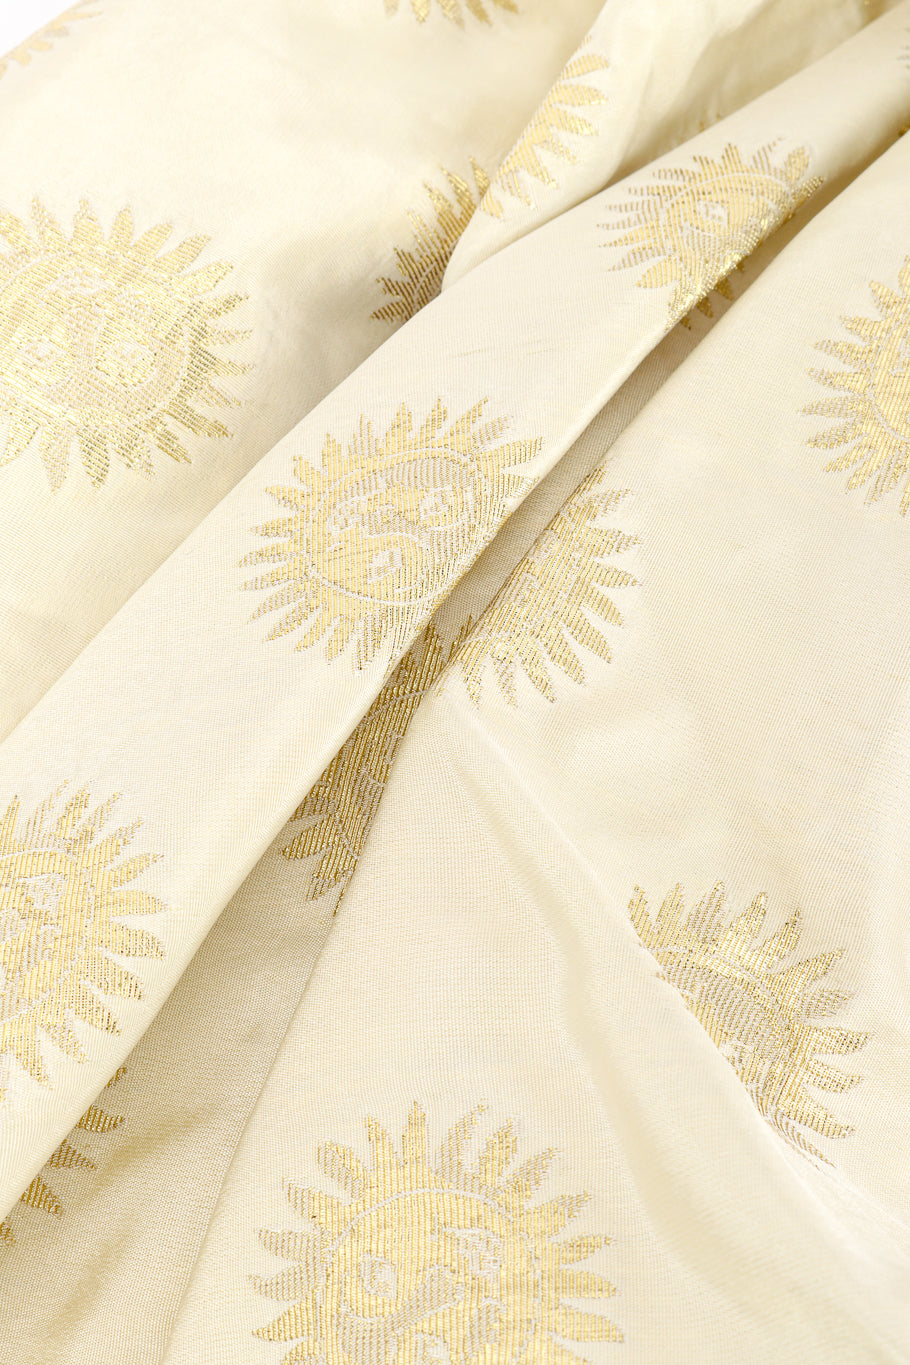 Vintage Bob Mackie Sunburst Strapless Gown fabric closeup @recessla